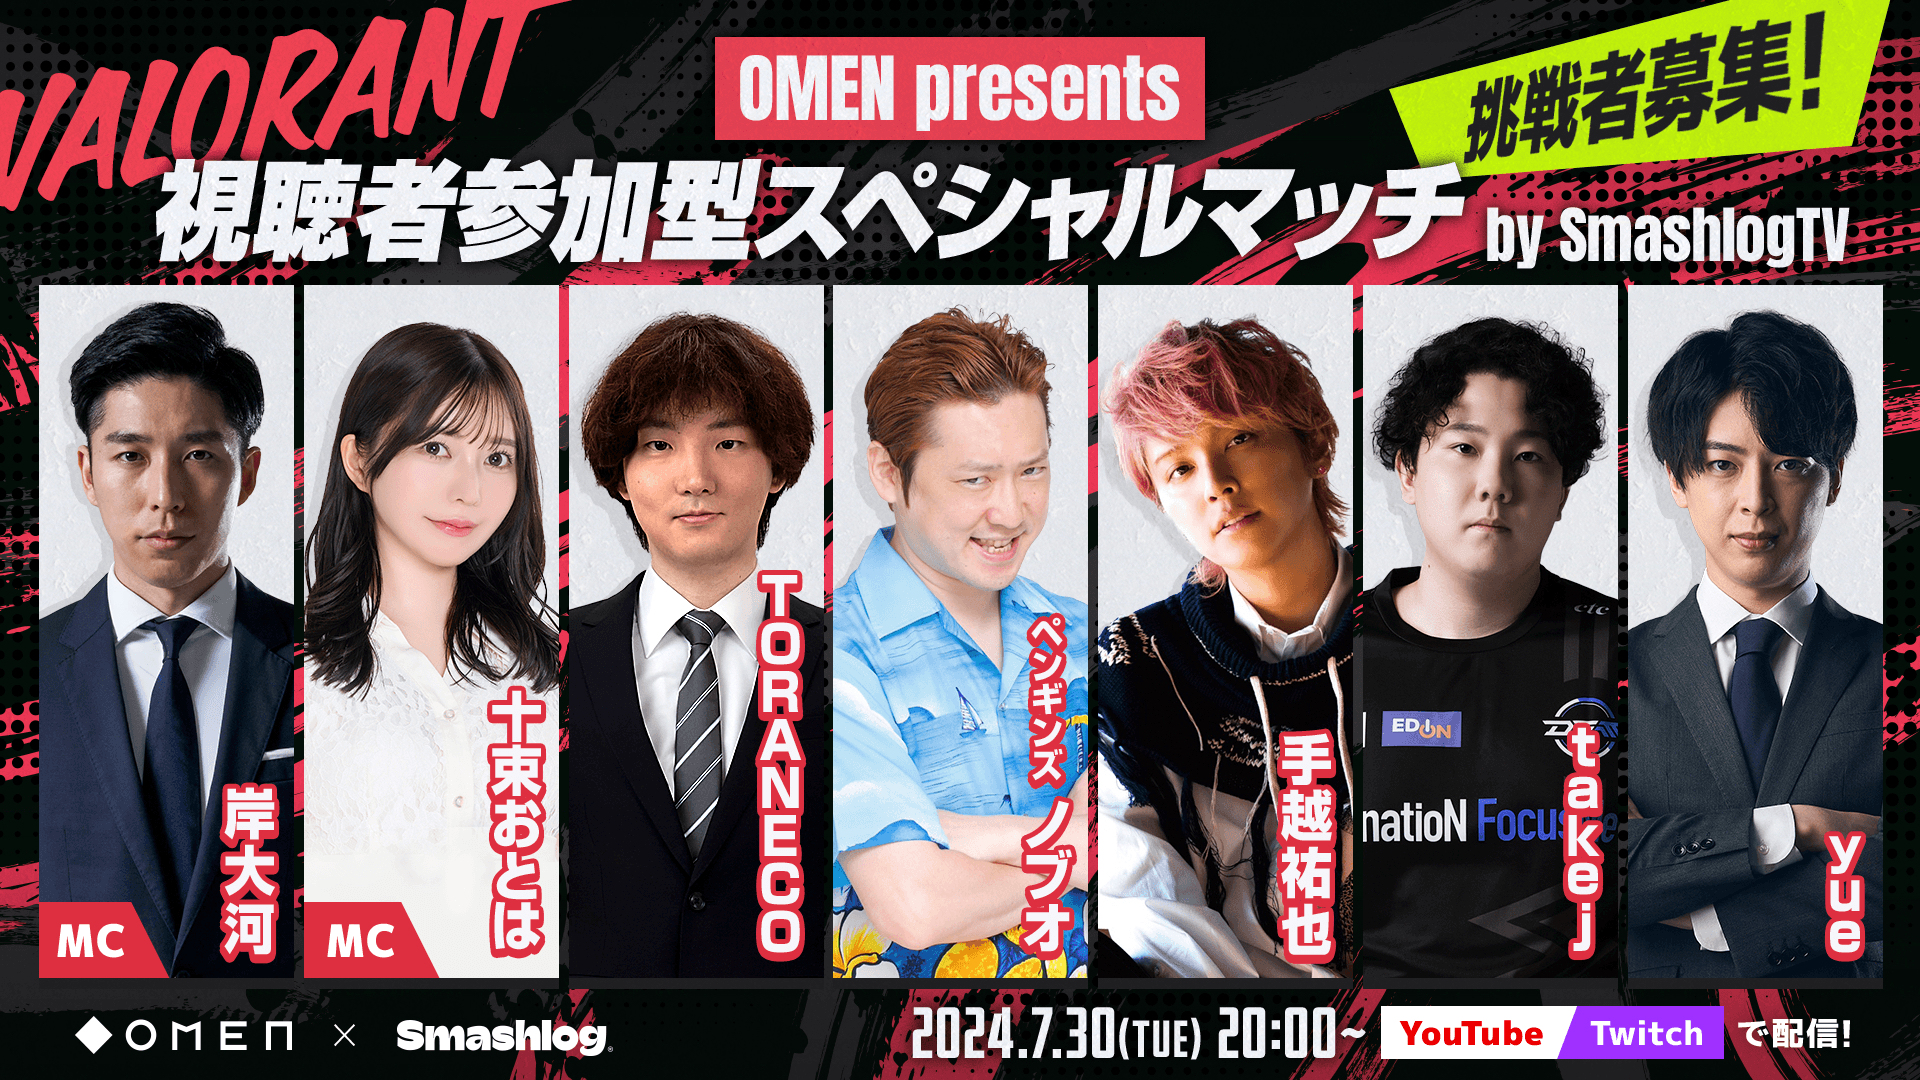 OMEN presents VALORANT 視聴者参加型スペシャルマッチ by SmashlogTV feature image